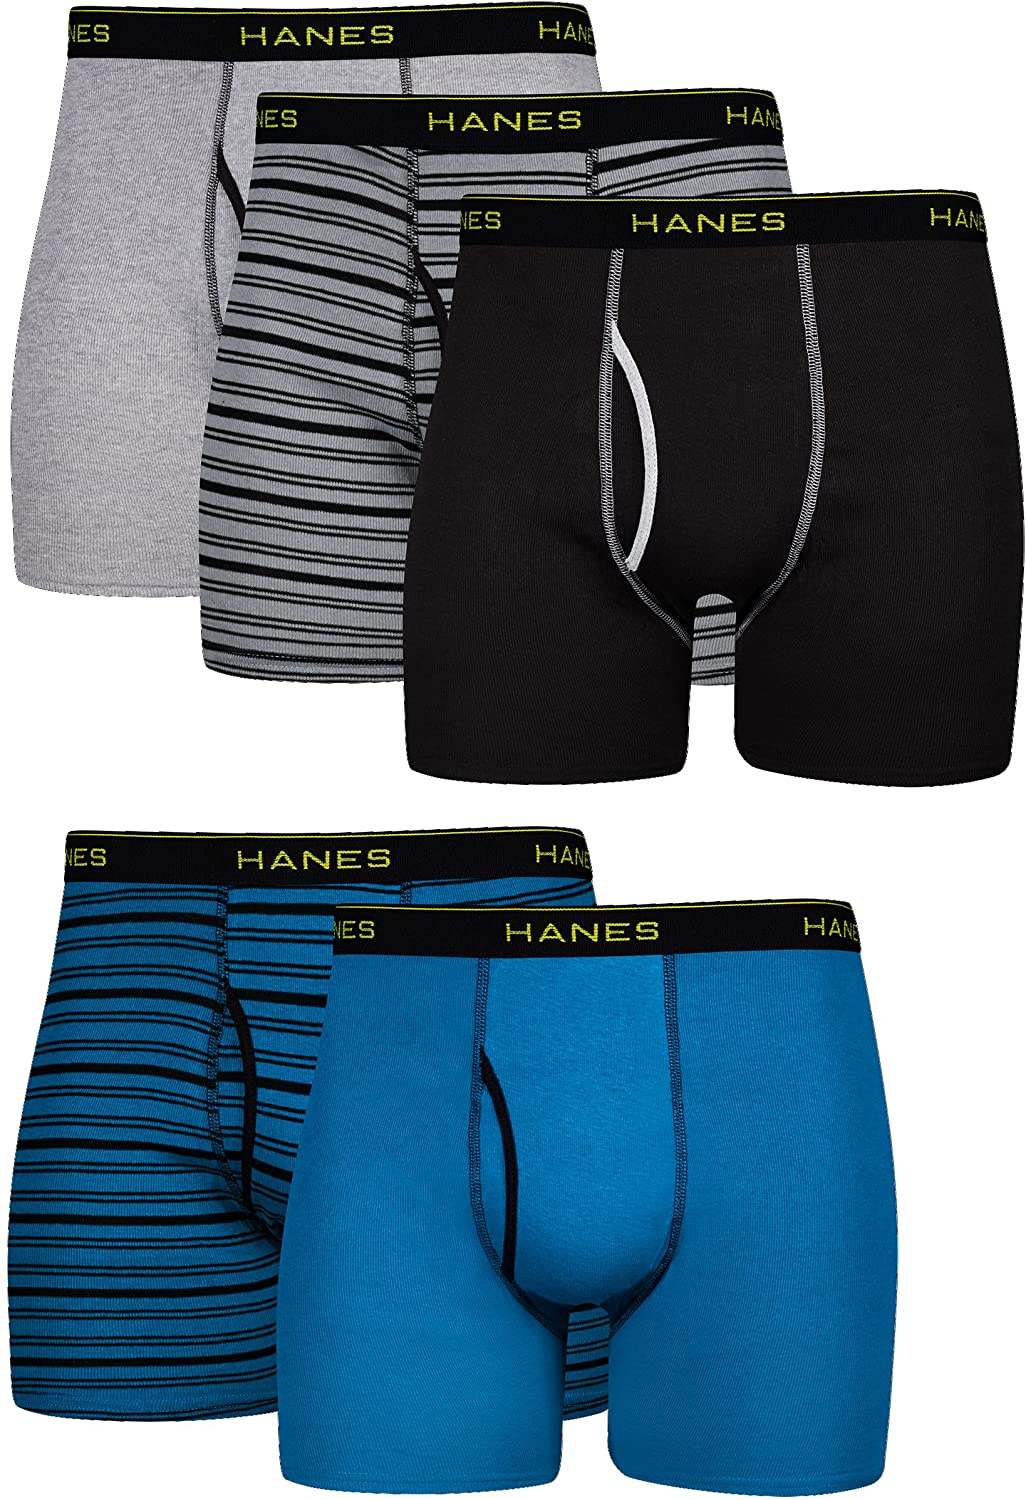 Hanes Men's Cool DRI Boxer Briefs Pack, Moisture-Wicking 100% Cotton, 6-Pack